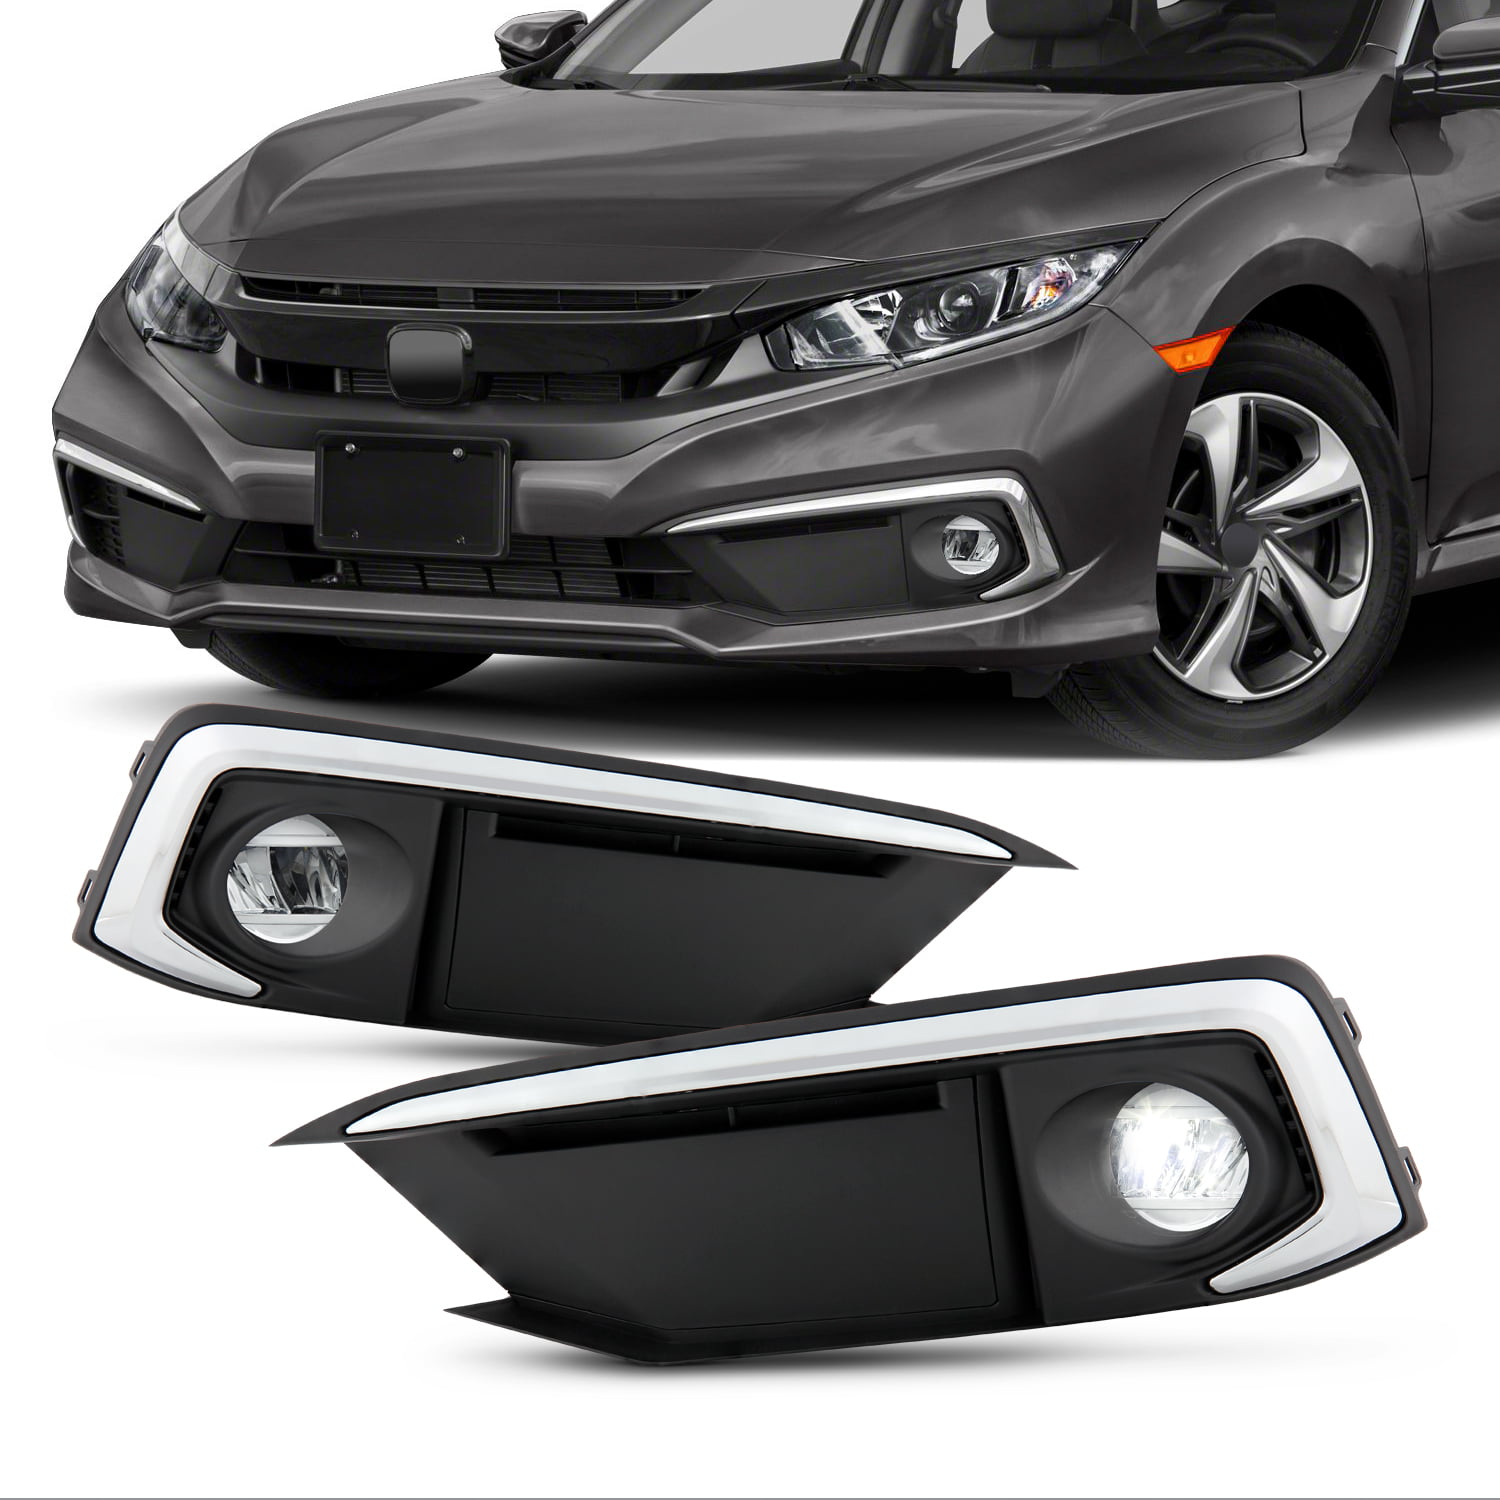 LED Rear Bumper Brake Fog Light Reflector For Nissan Altima 2019 2020 Lamp LH RH